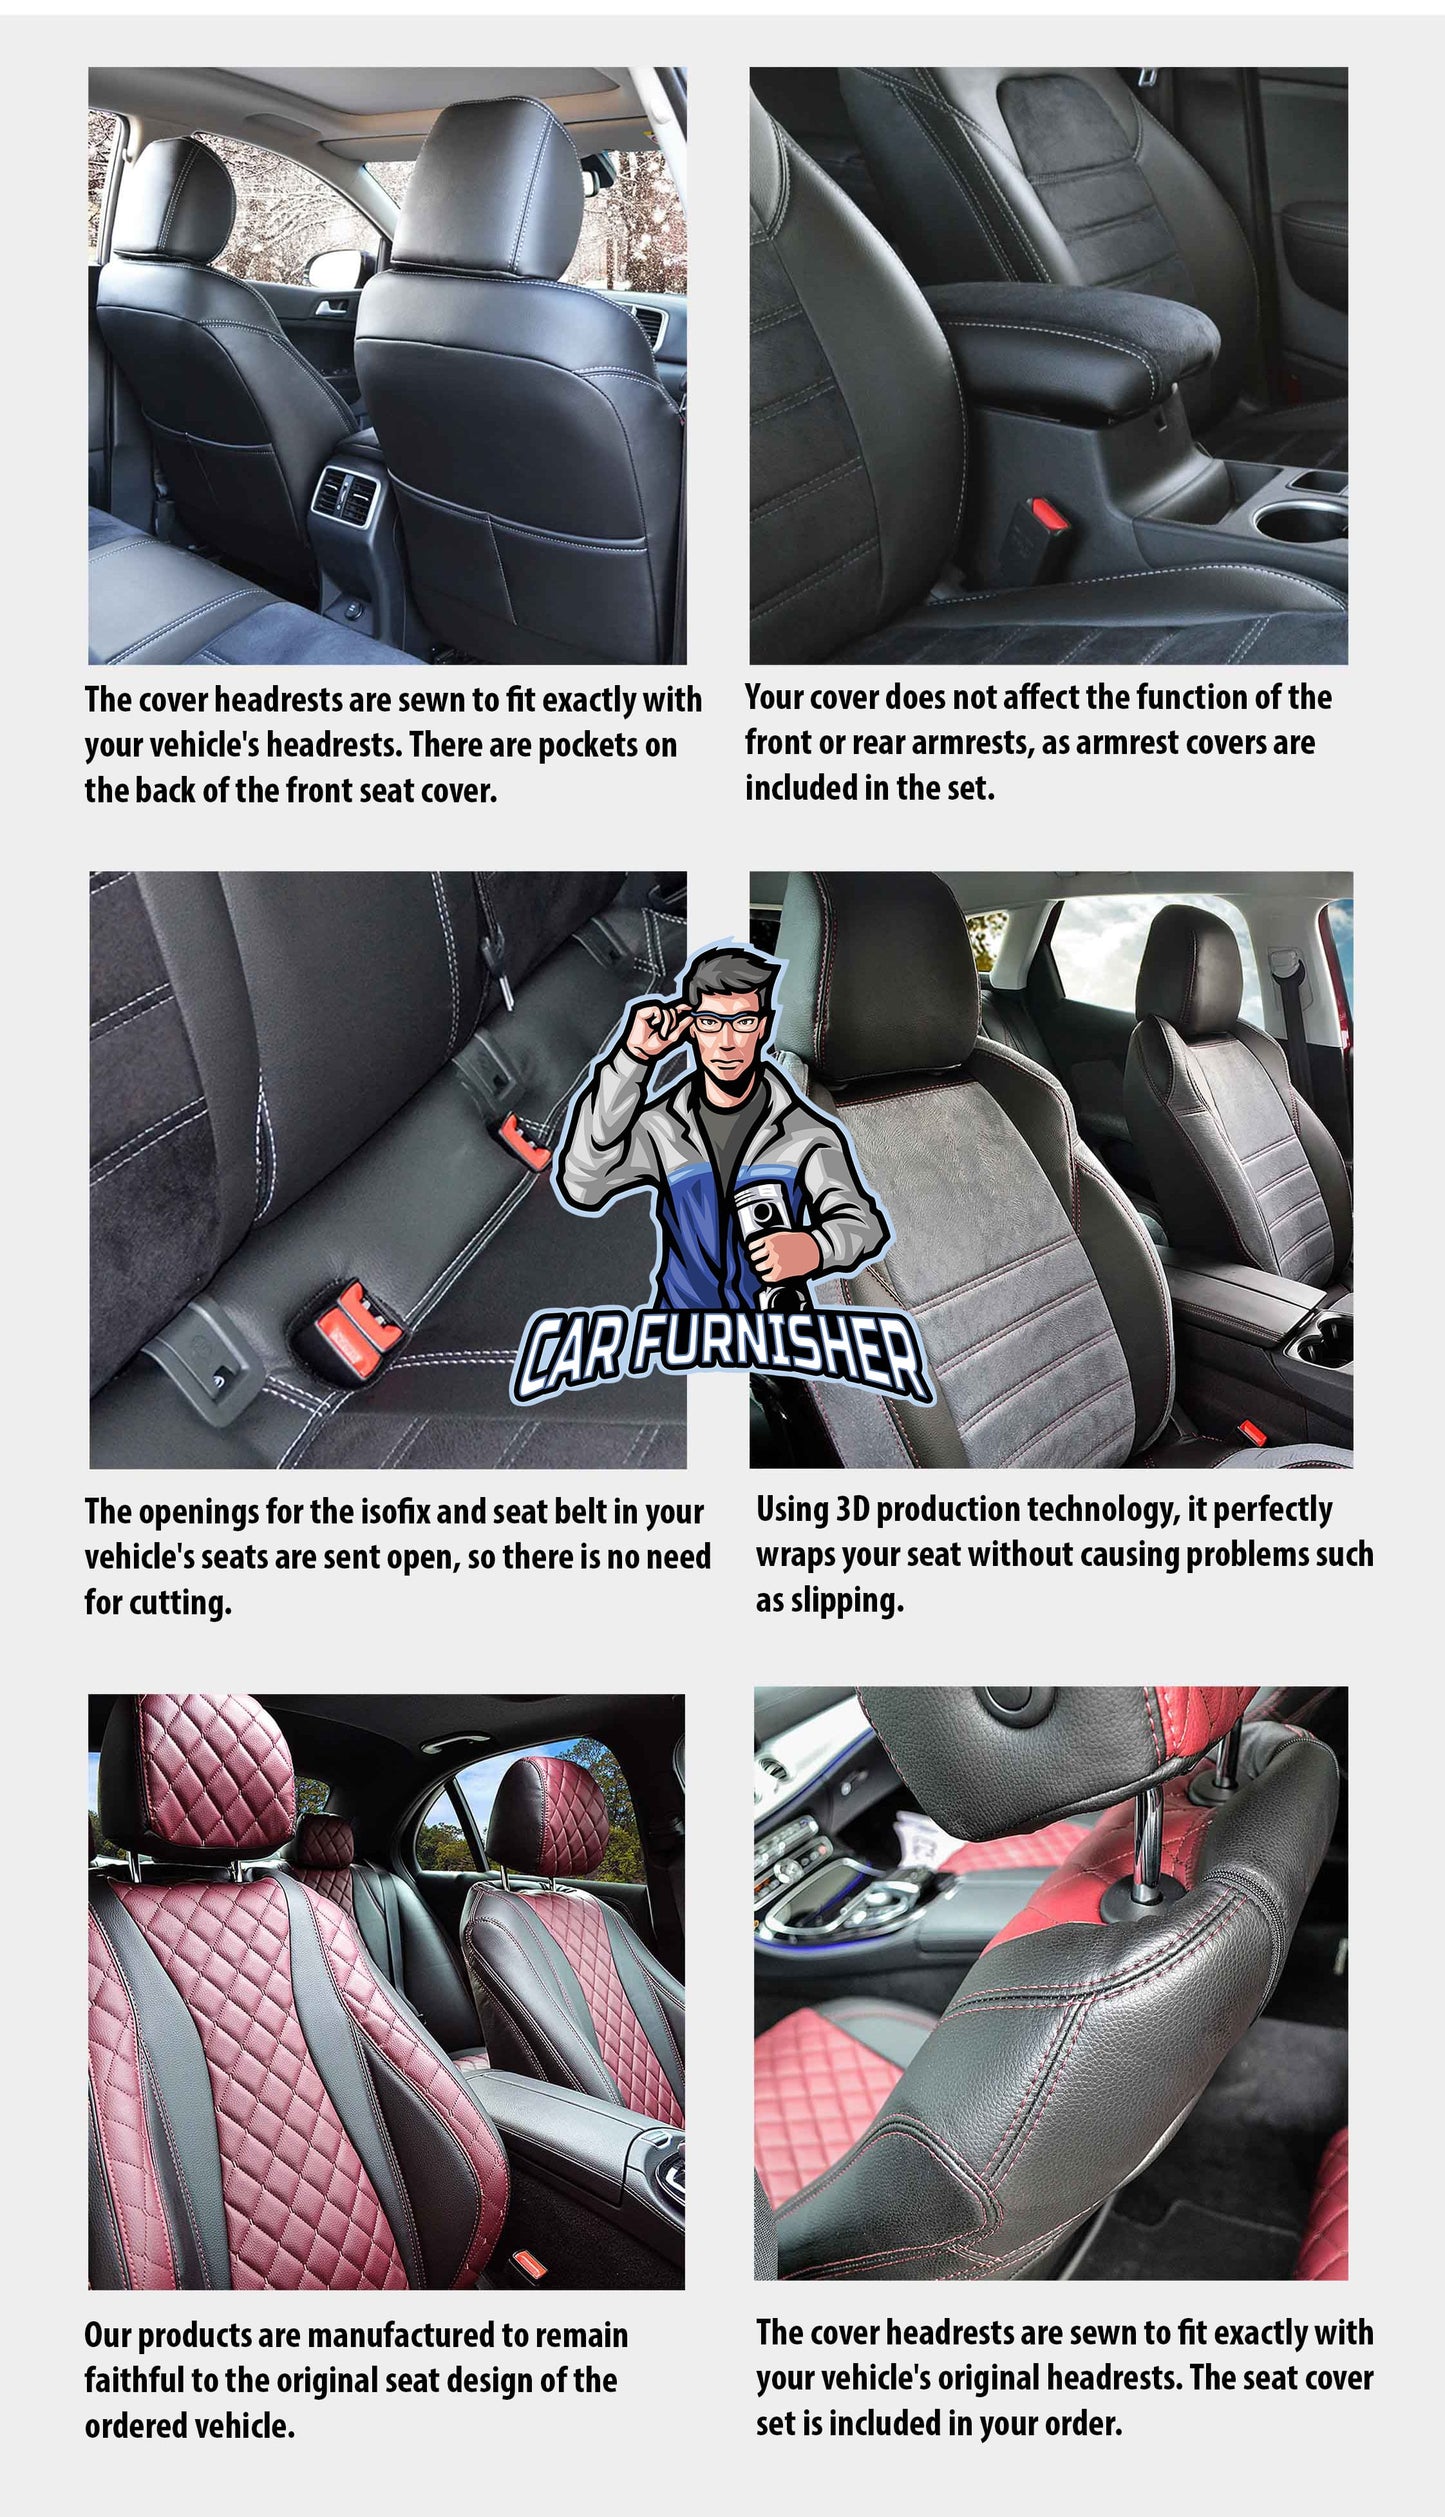 Kia Bongo Seat Covers Milano Suede Design Smoked Leather & Suede Fabric